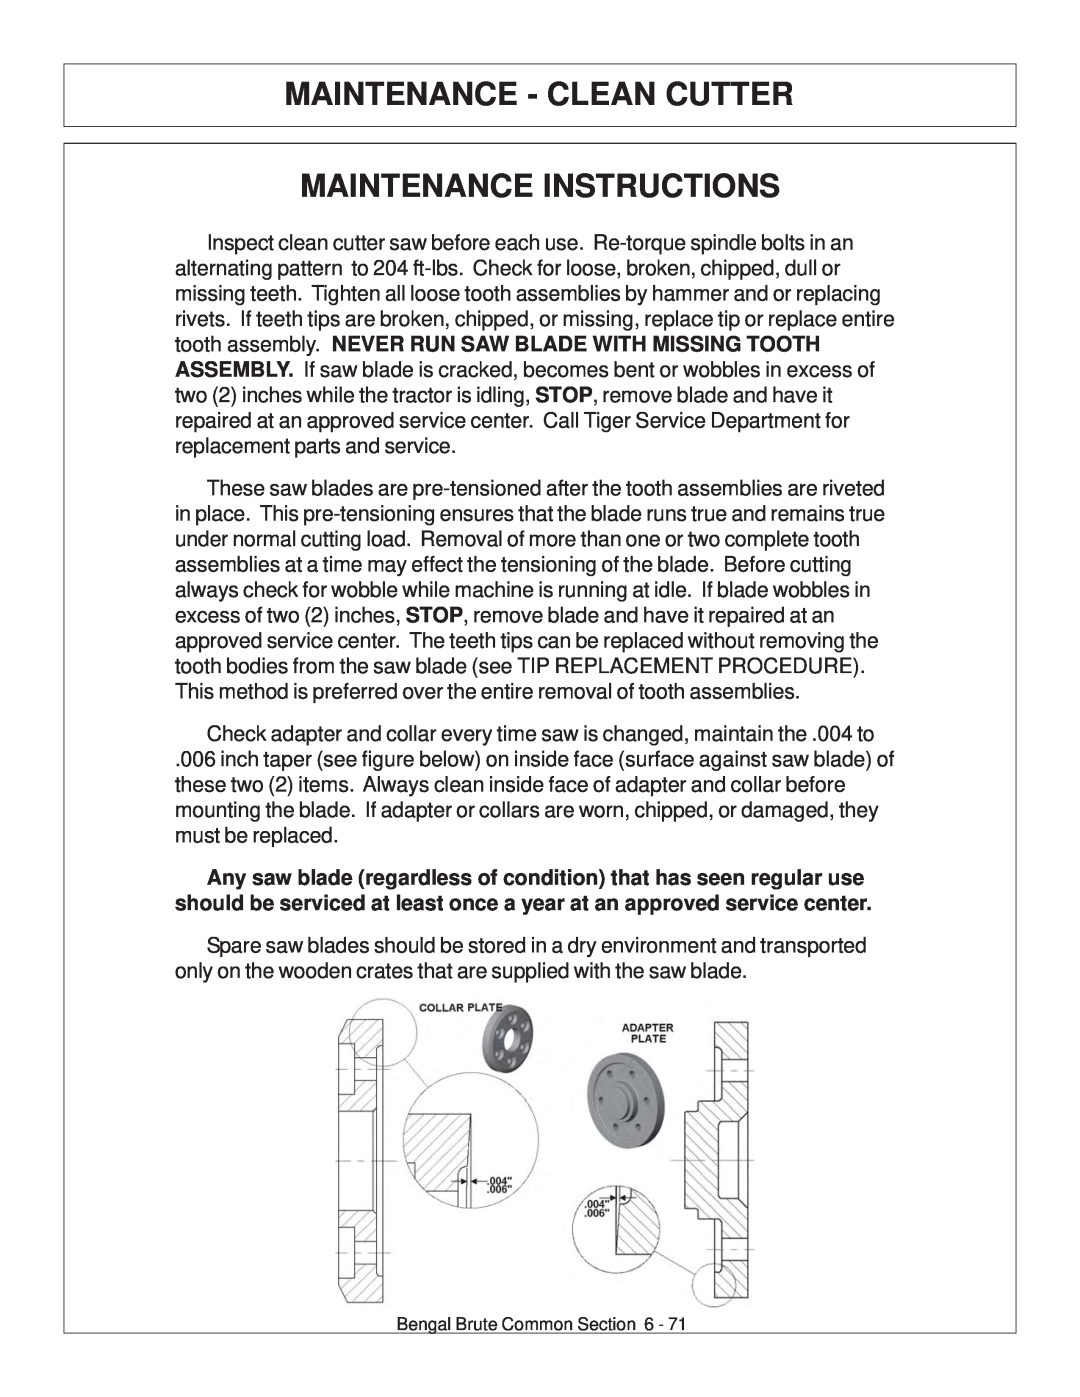 Tiger JD 62-6420 manual Maintenance - Clean Cutter Maintenance Instructions 